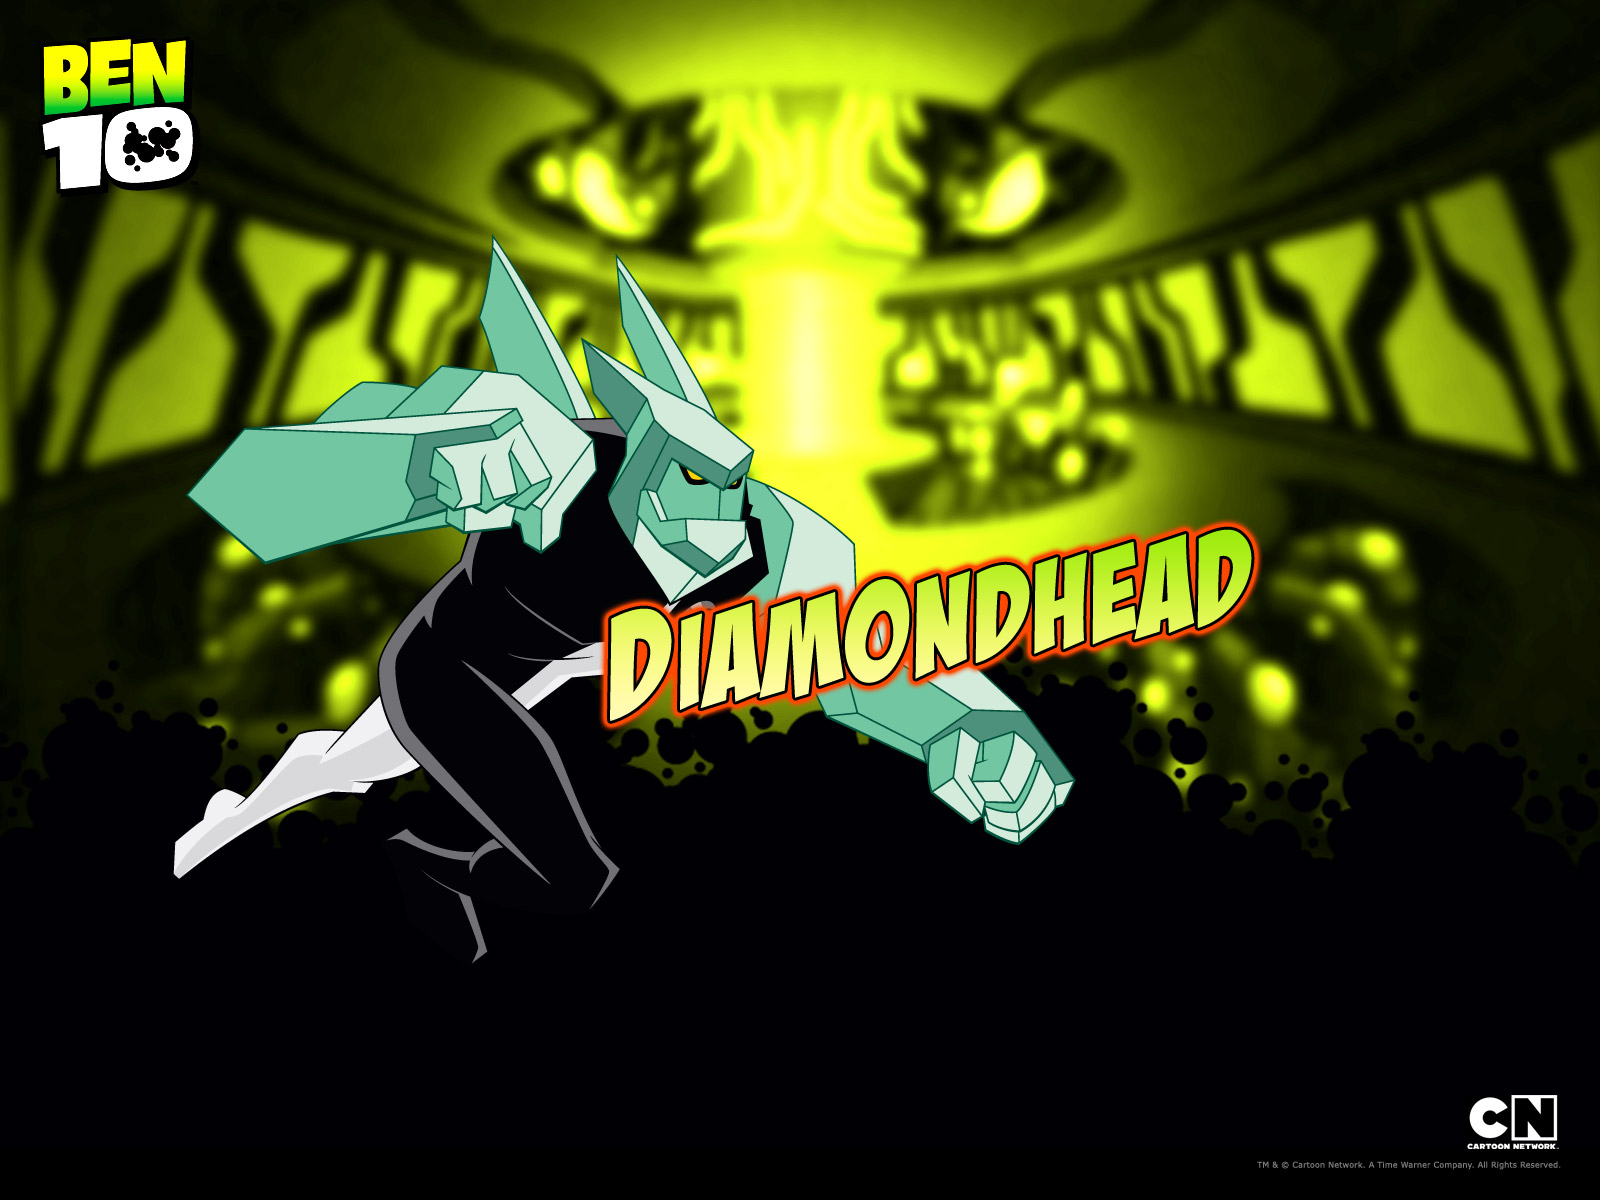 Ben 10 Diamondhead Picture and Free Wallpaper Cartoon Network